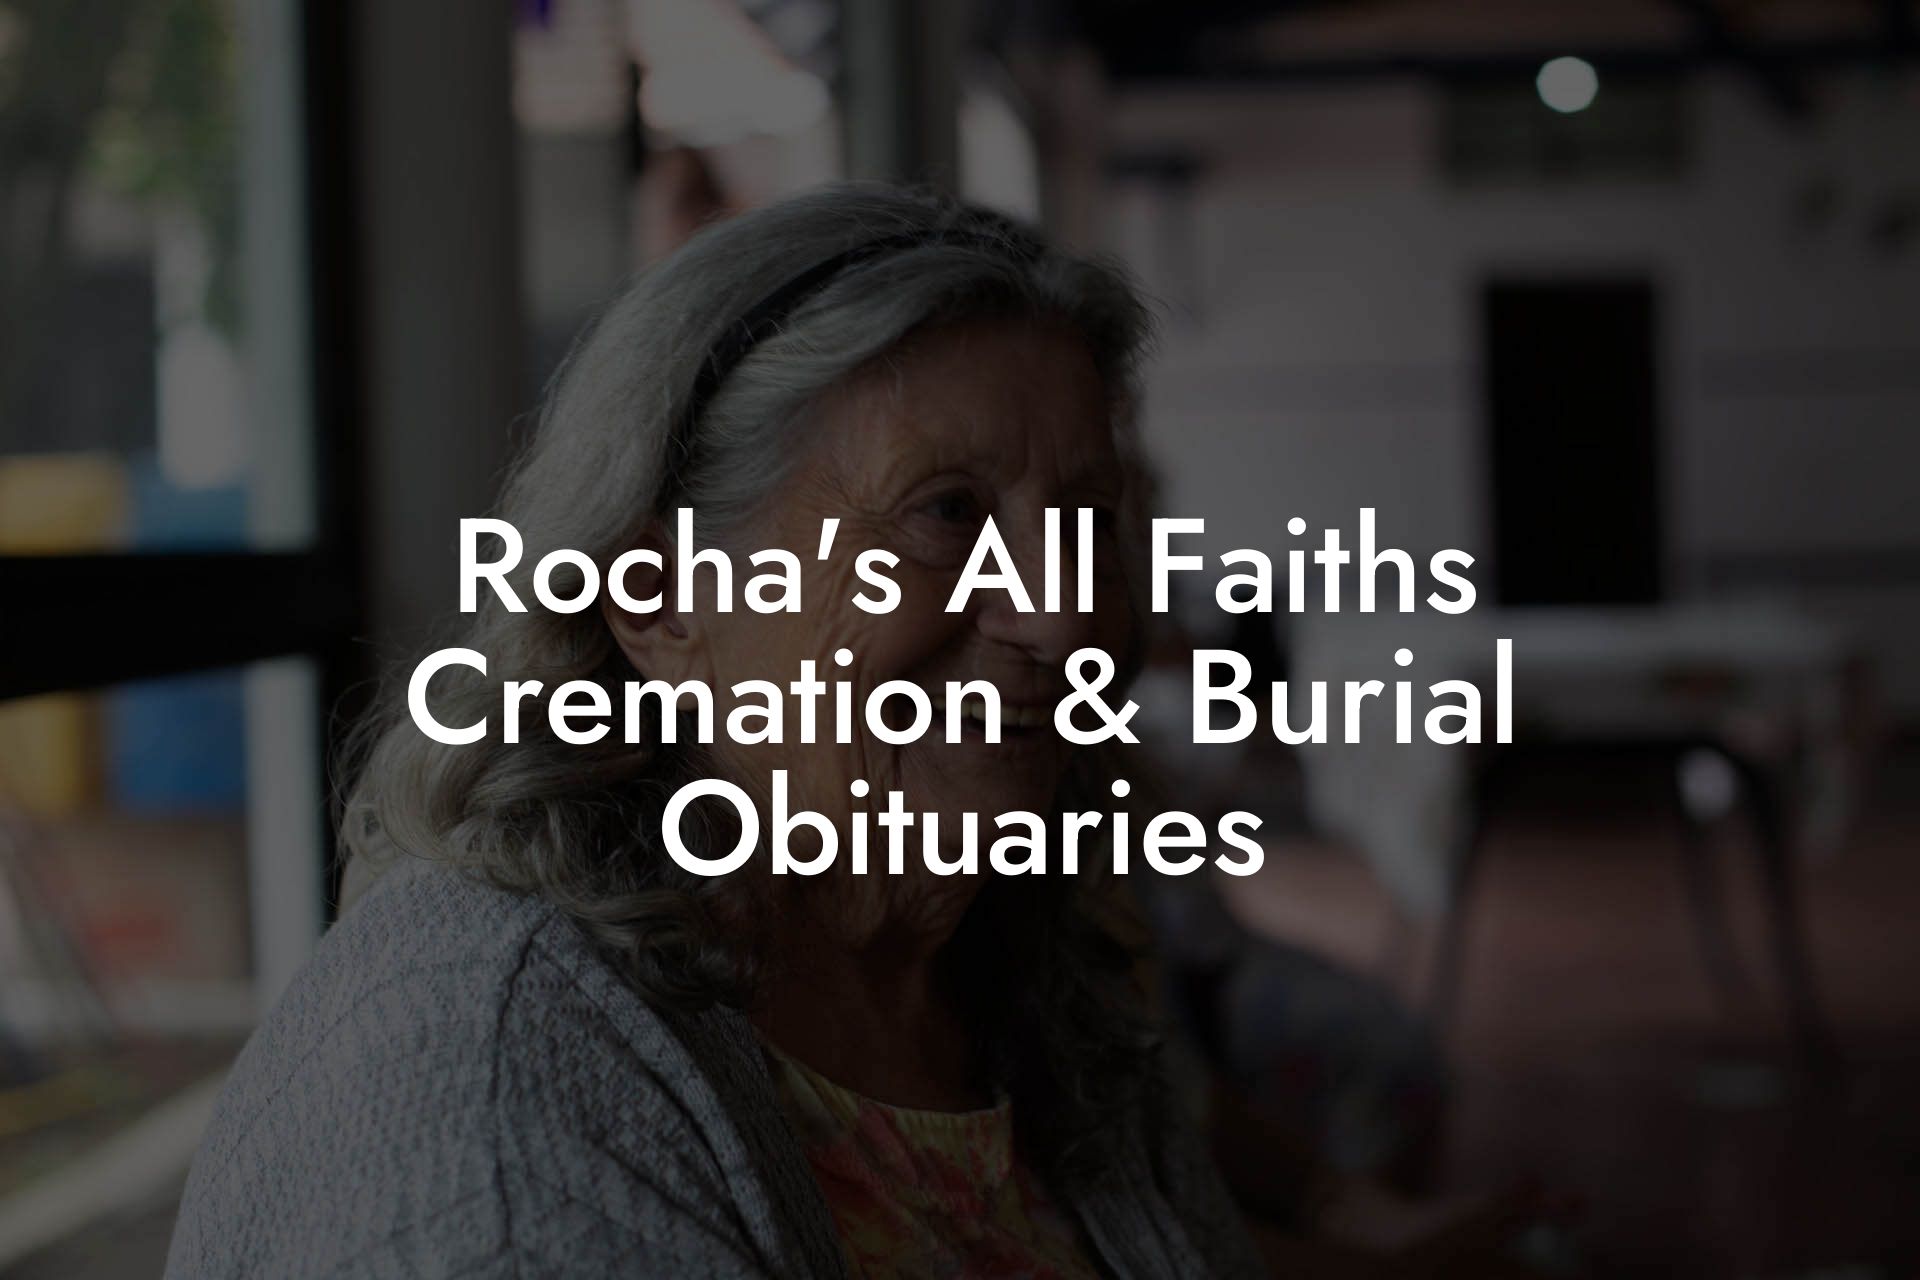 Rocha's All Faiths Cremation & Burial Obituaries